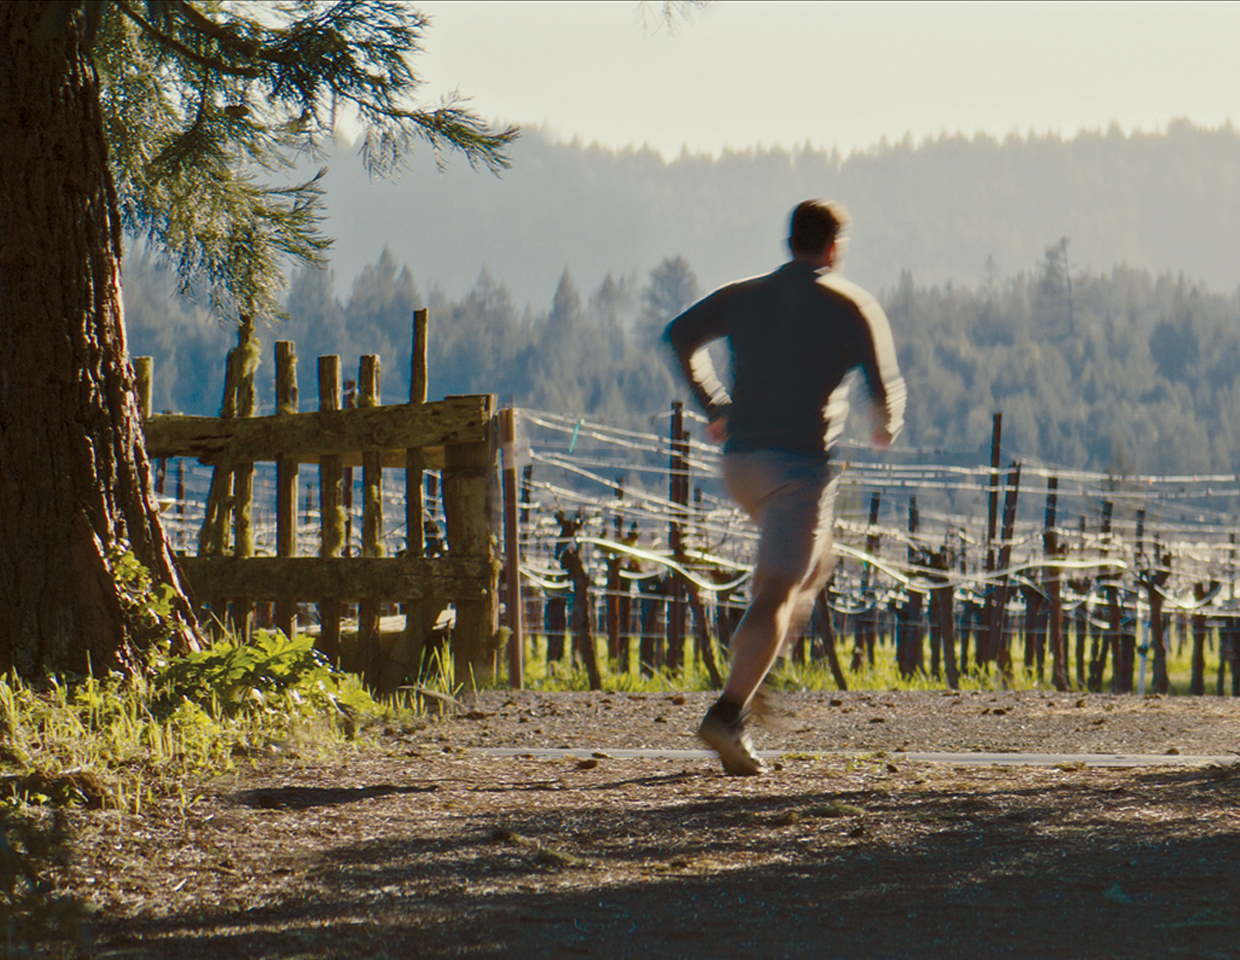 Outlier wines winemaker Derek Rohlffs running through the vineyard with tall trees in the background